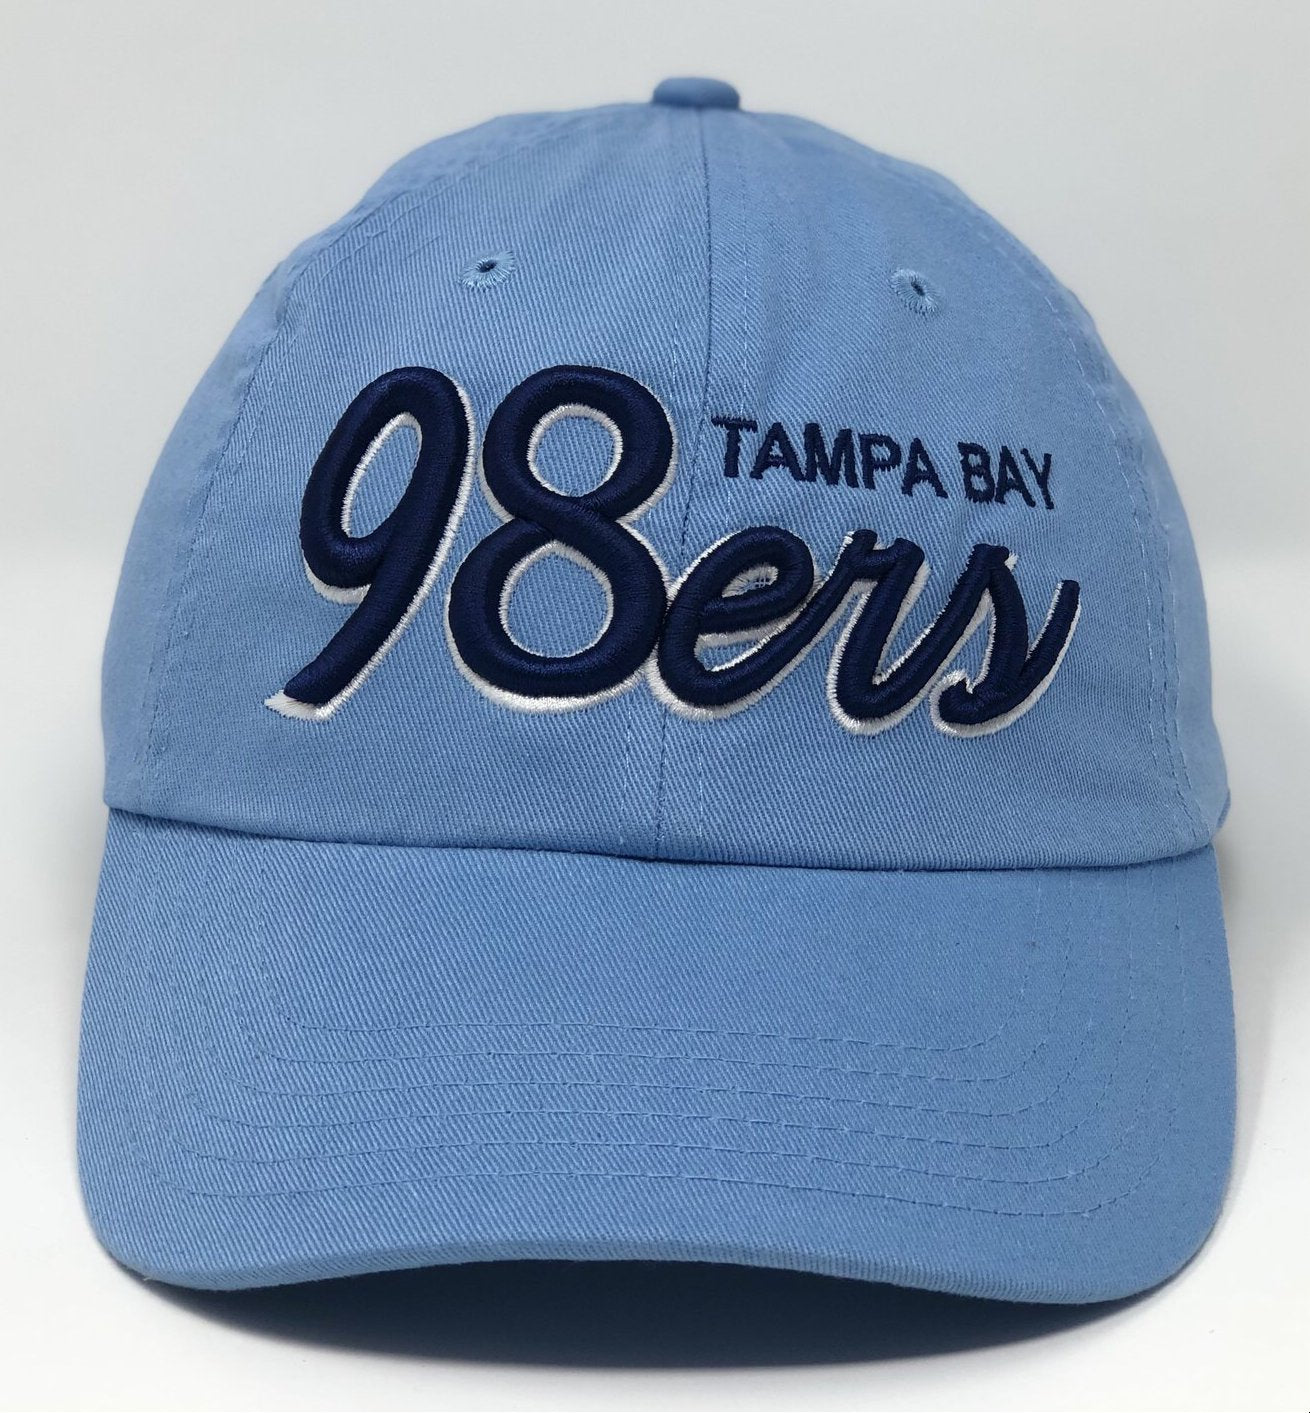 Tampa Bay 98ers Hat - Powder Blue Dad Hat